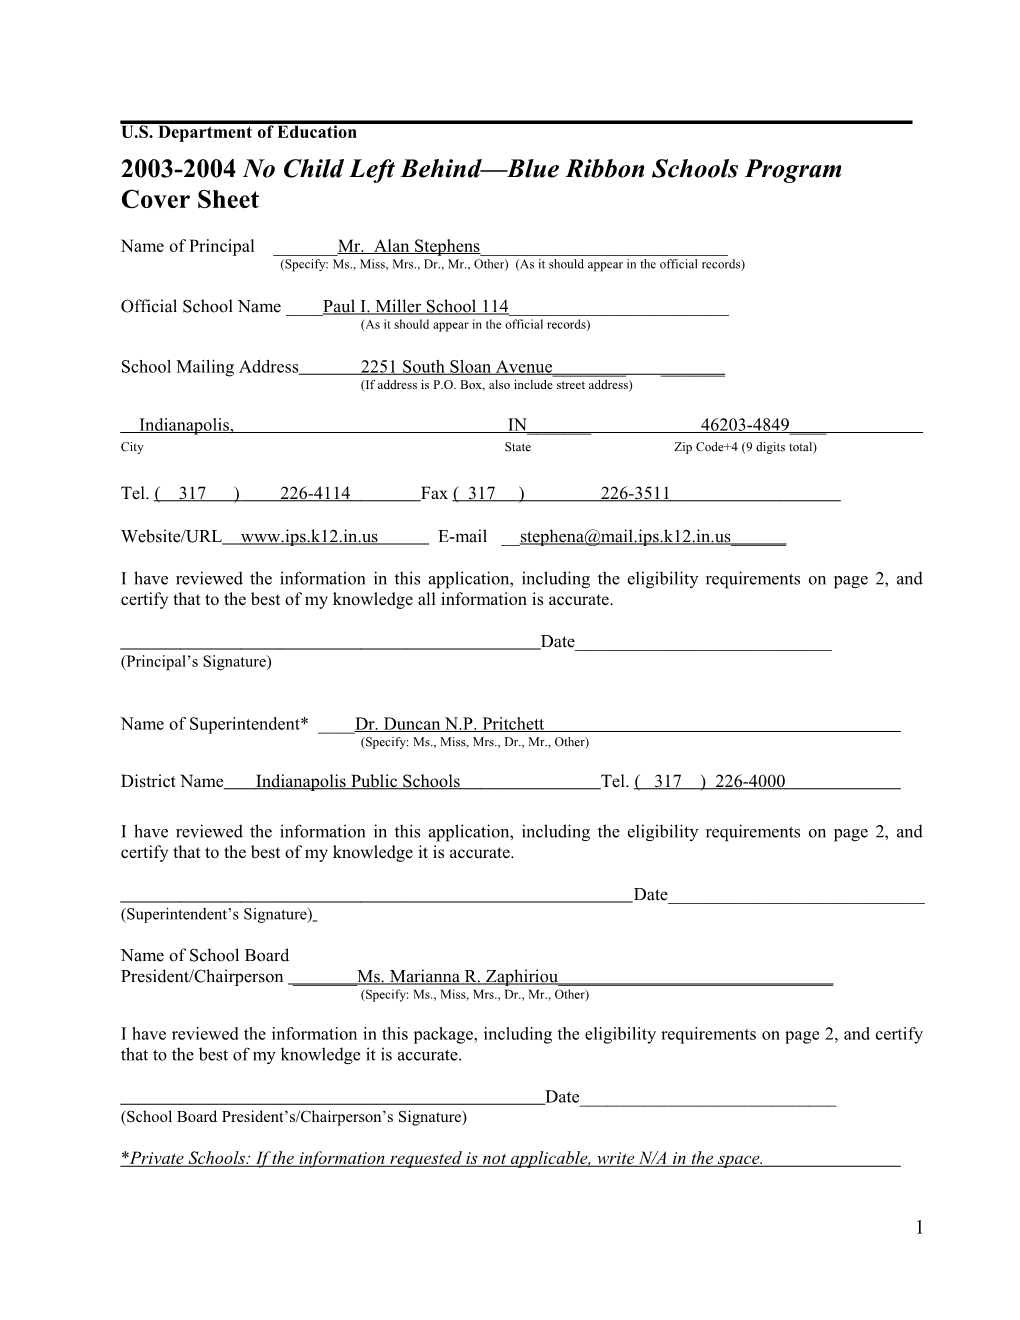 Paul I. Miller School 114 2004 No Child Left Behind-Blue Ribbon School Application (Msword)